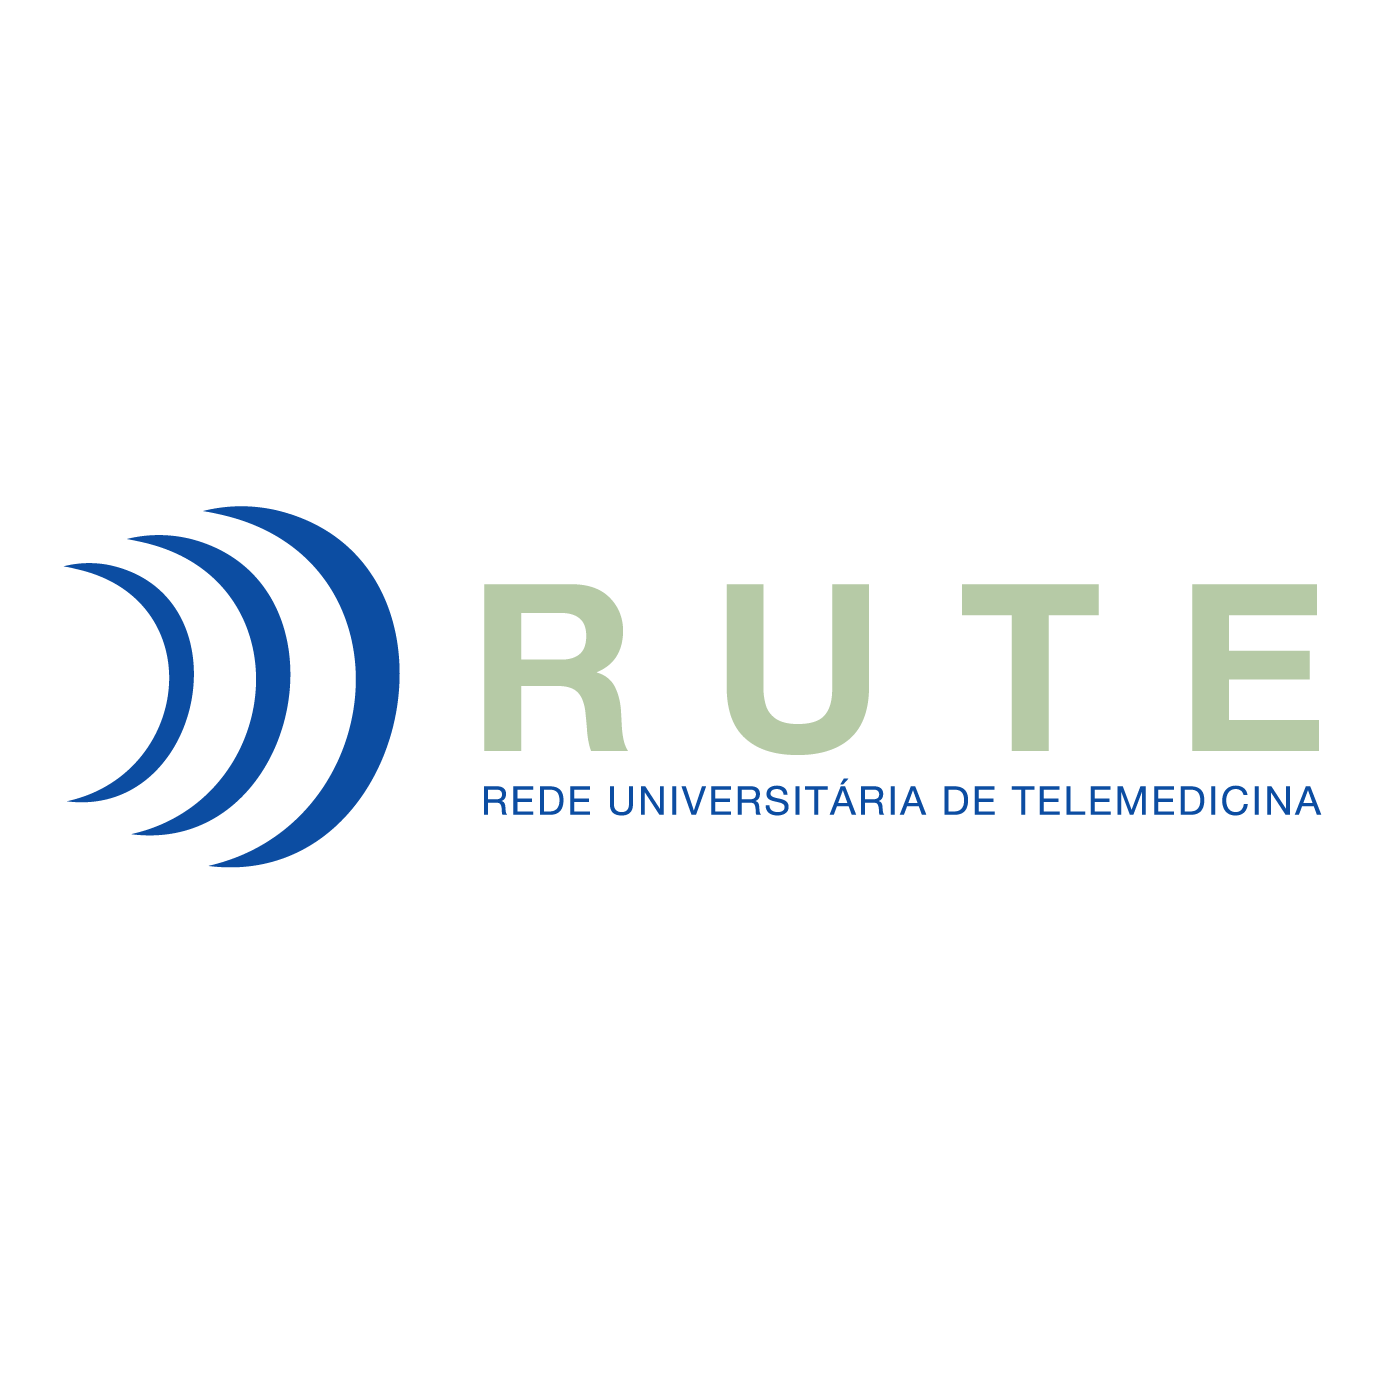 Rede Universitária de Telemedicina (RUTE)